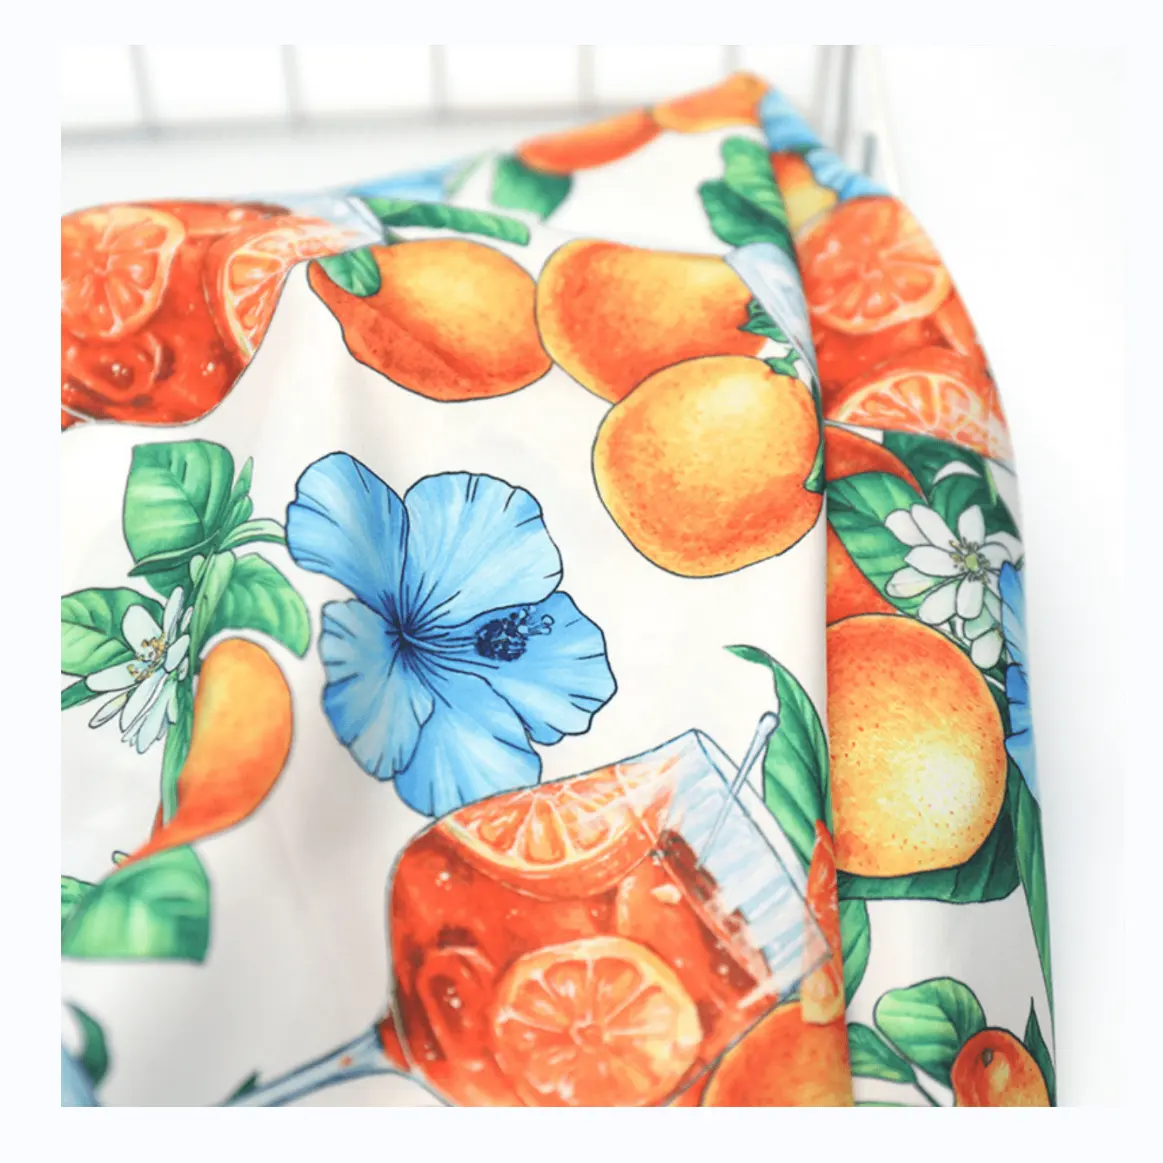 Gaun Satin cetak Digital buah oranye cerah kain Satin 100% poliester untuk pakaian anak-anak gaun Satin dengan pita sutra